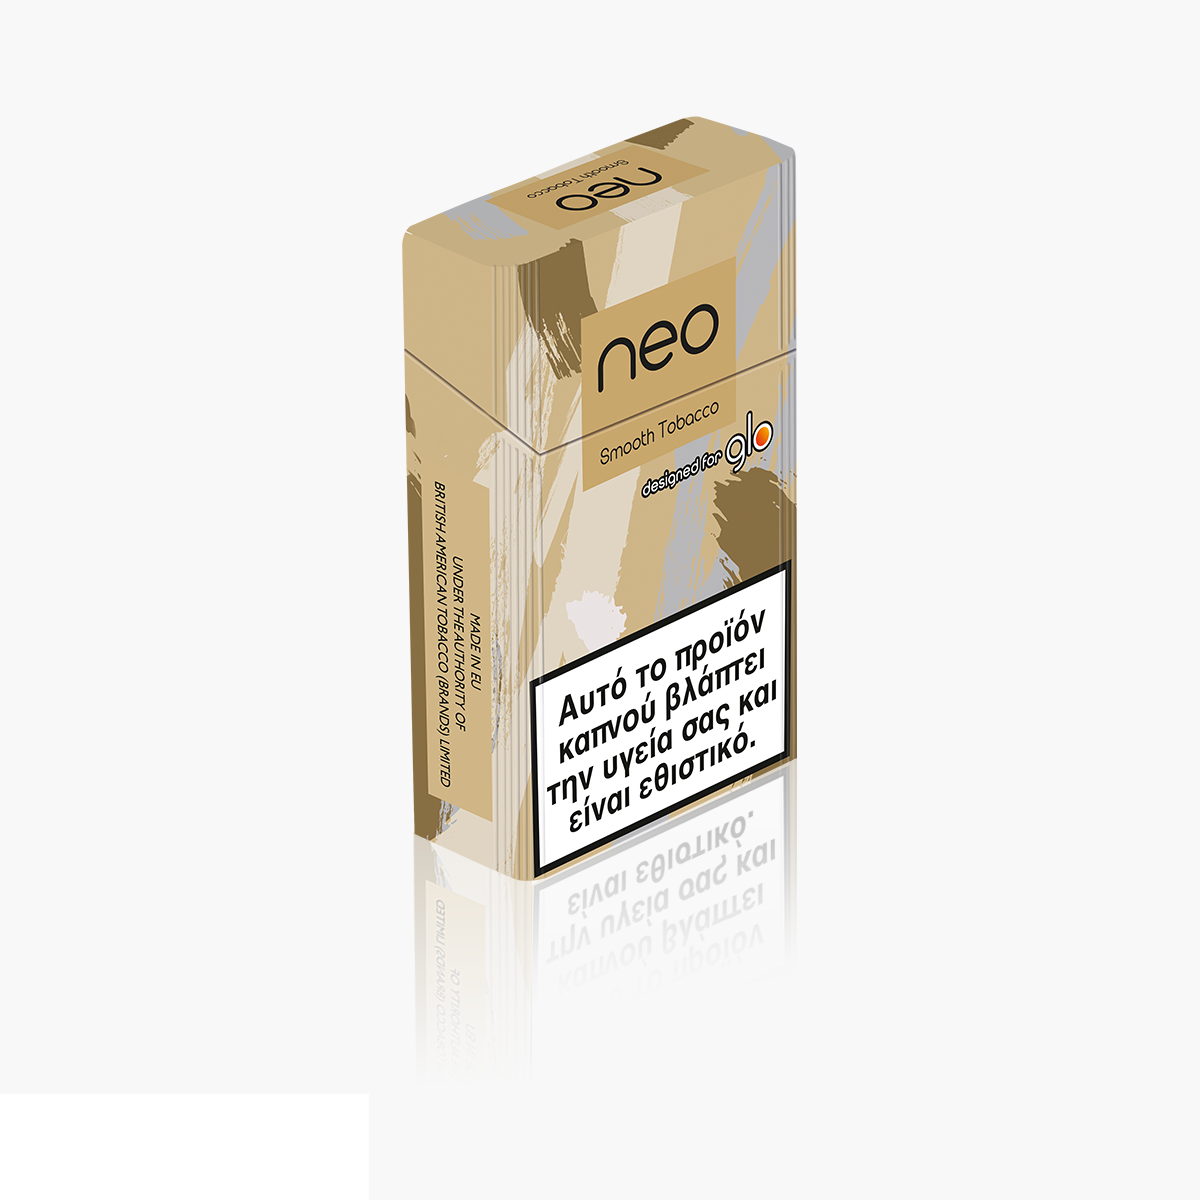 New Glo Hyper Neo Demi Smooth Tobacco Heated Tobacco Sticks